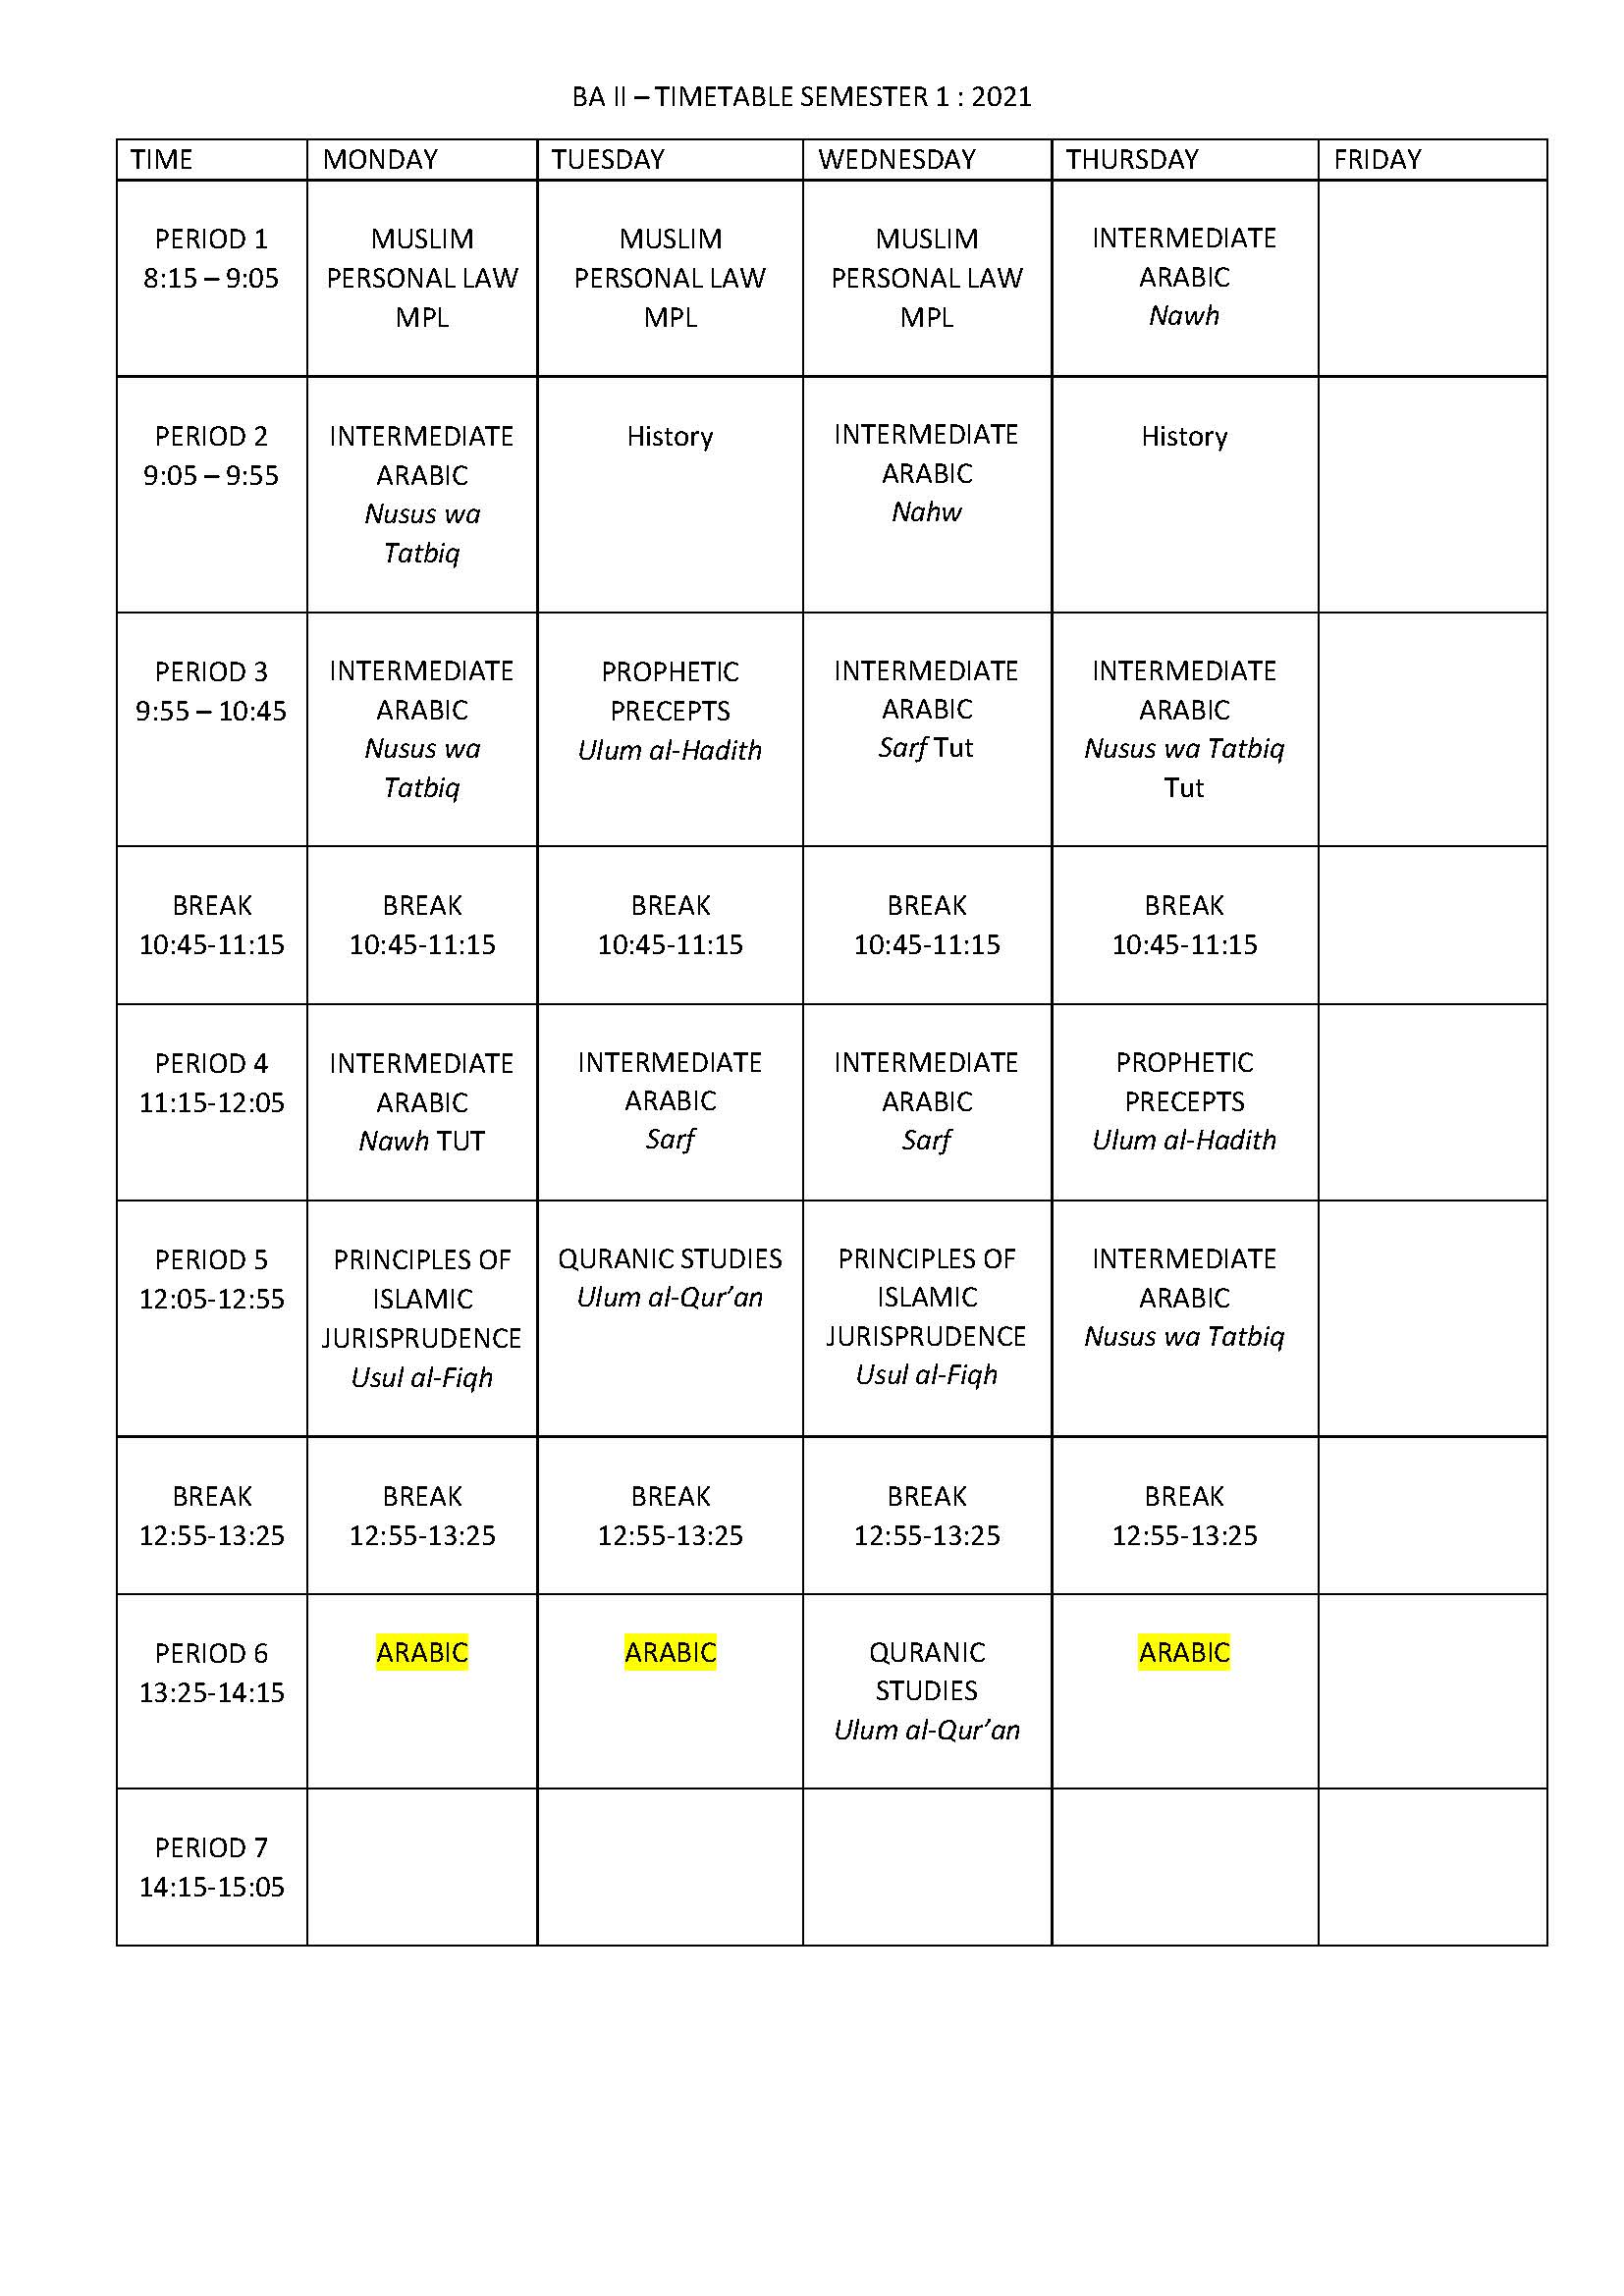 BA II Timetable Semester 1 2021